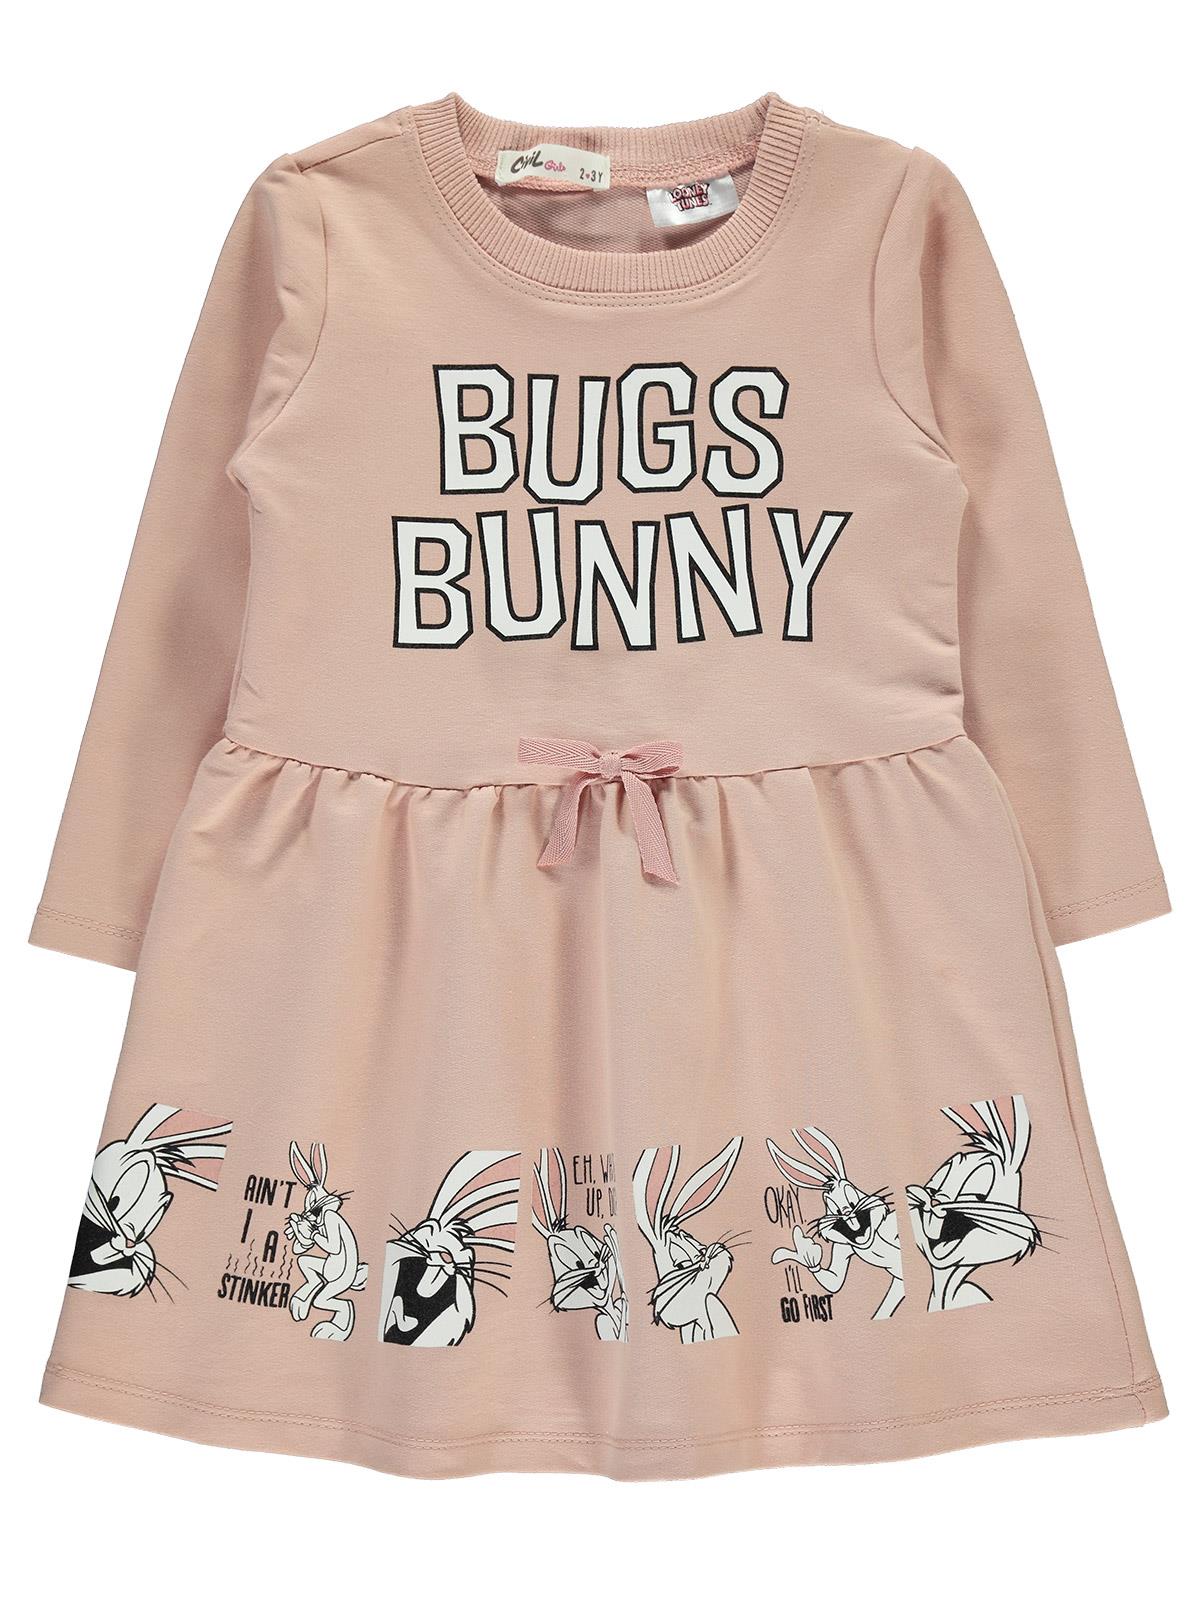 Bugs Bunny Kız Çocuk Elbise 2-5 Yaş Pudra